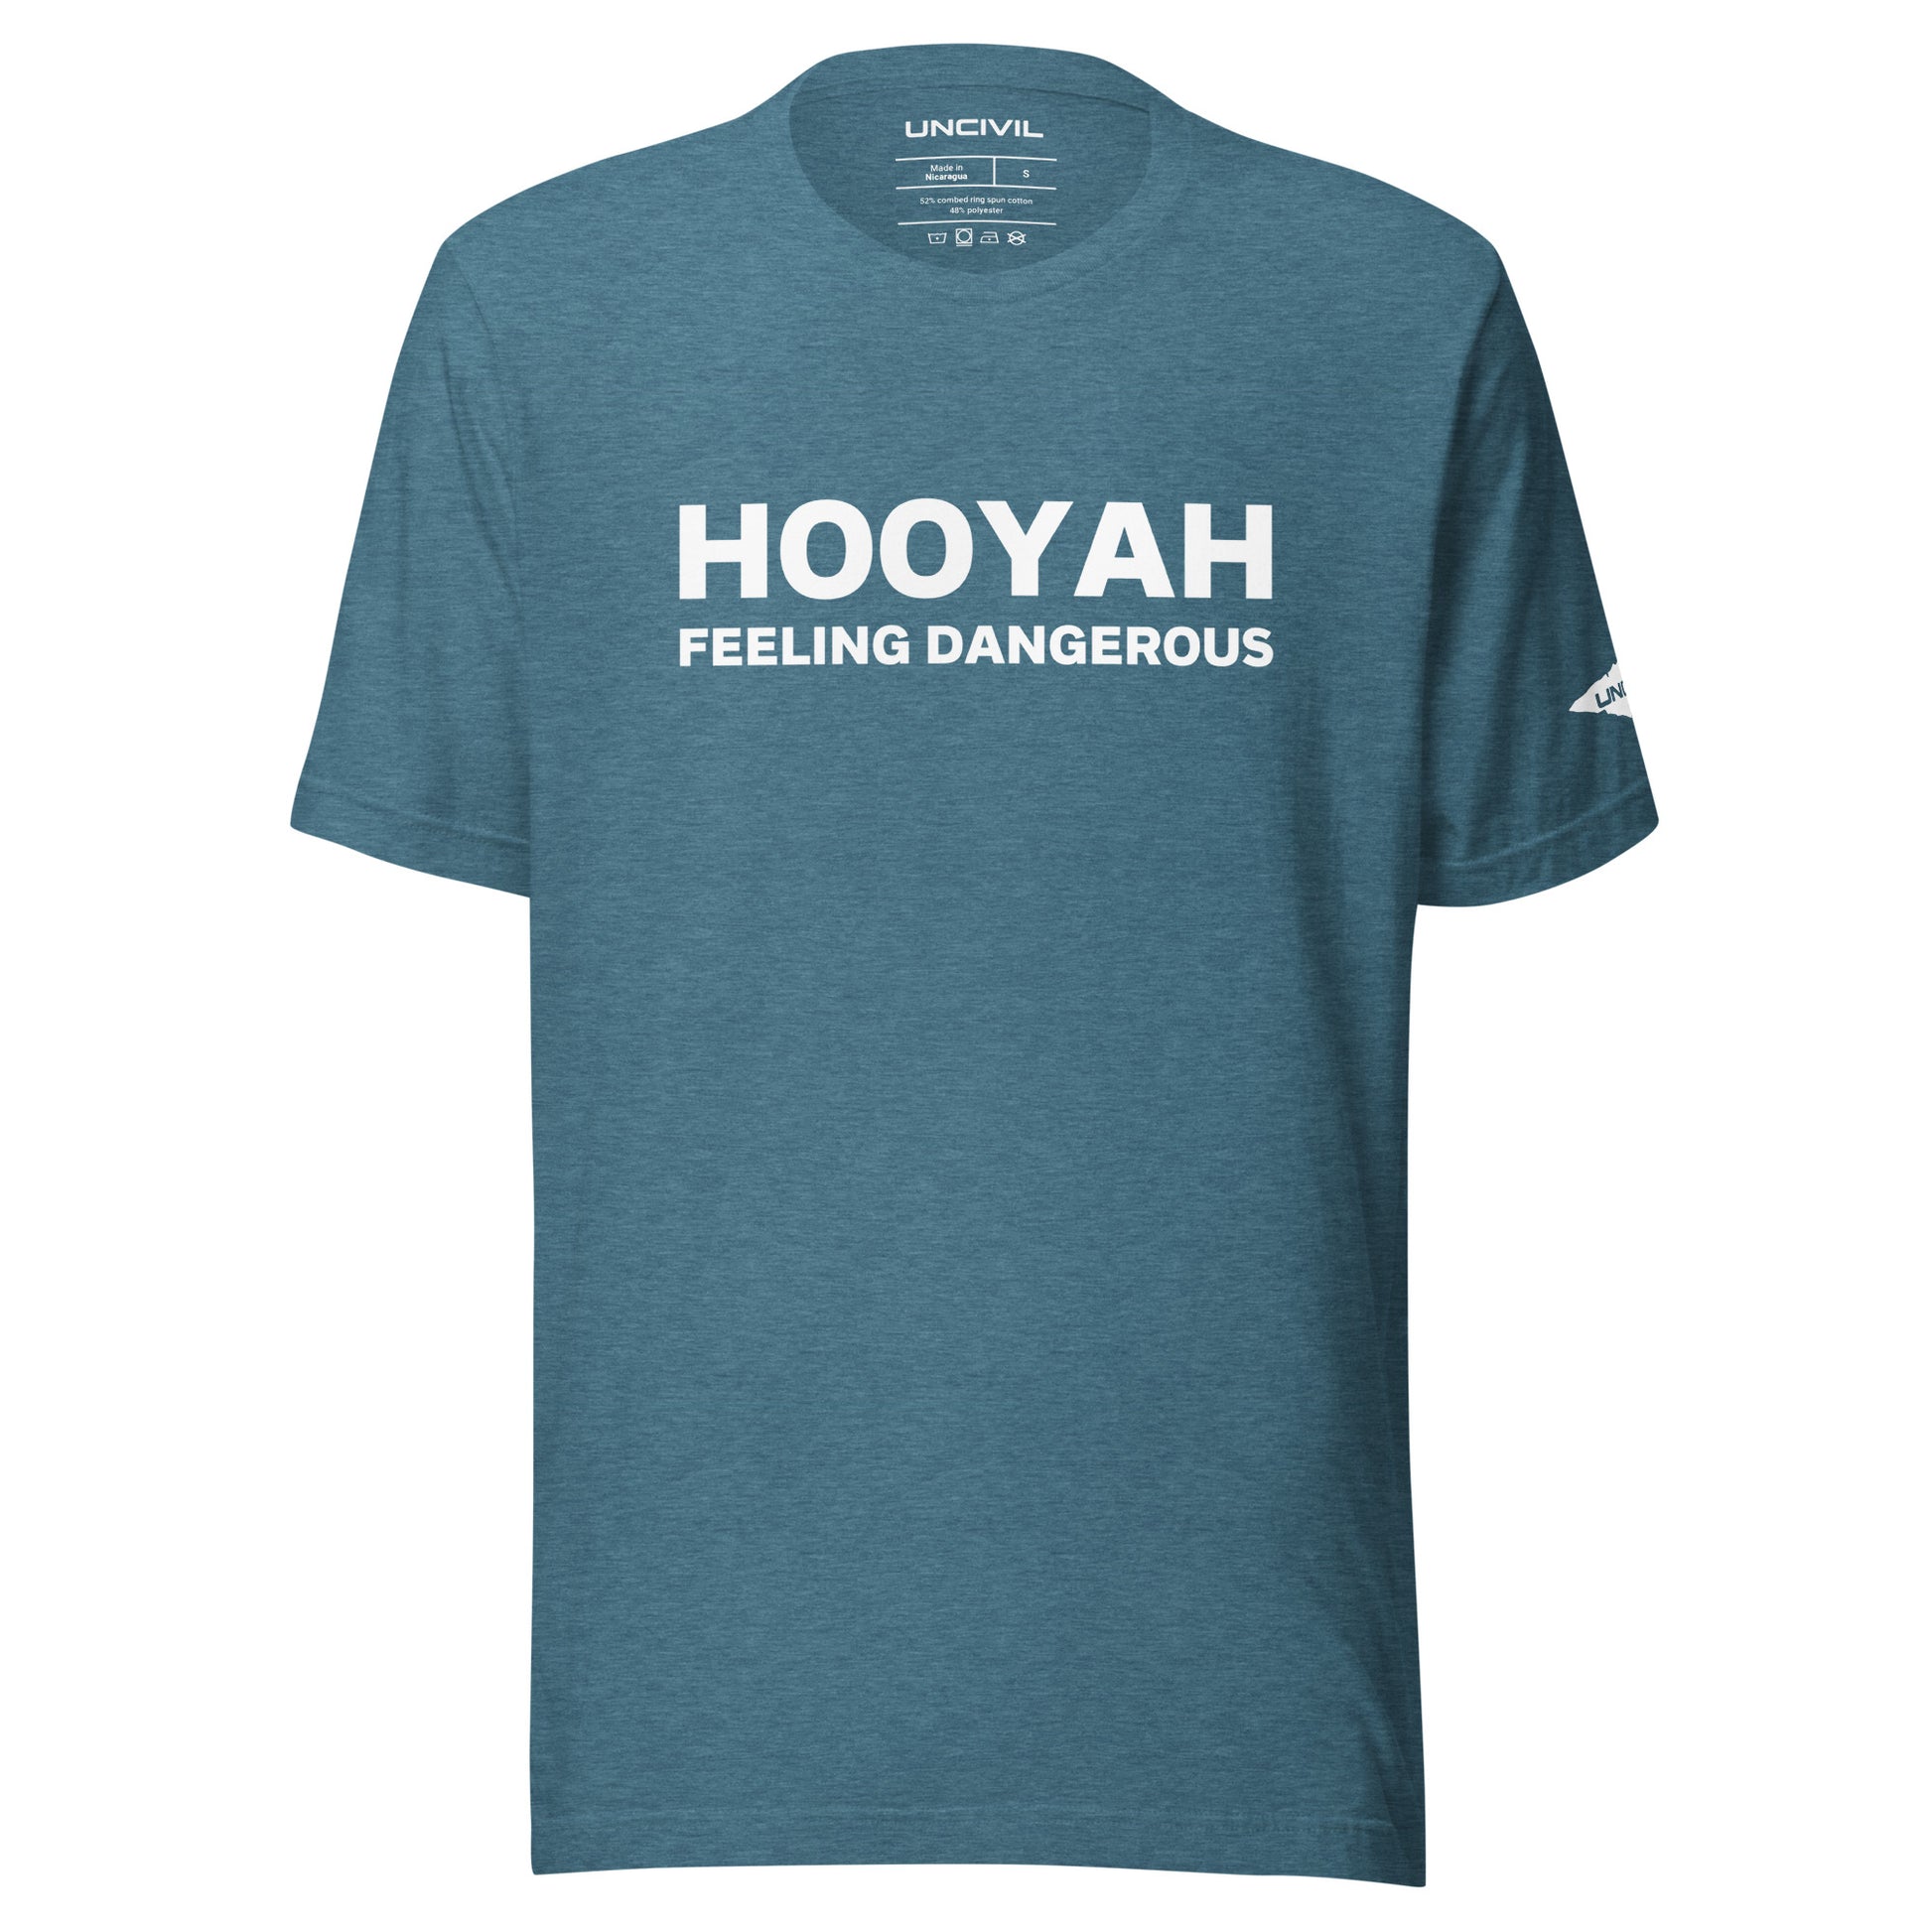 Hooyah, Feeling Dangerous shirt. The term "hooyah" is a U.S. Navy SEALs battle cry often used as motivation. Heather Deep Teal unisex t-shirt.